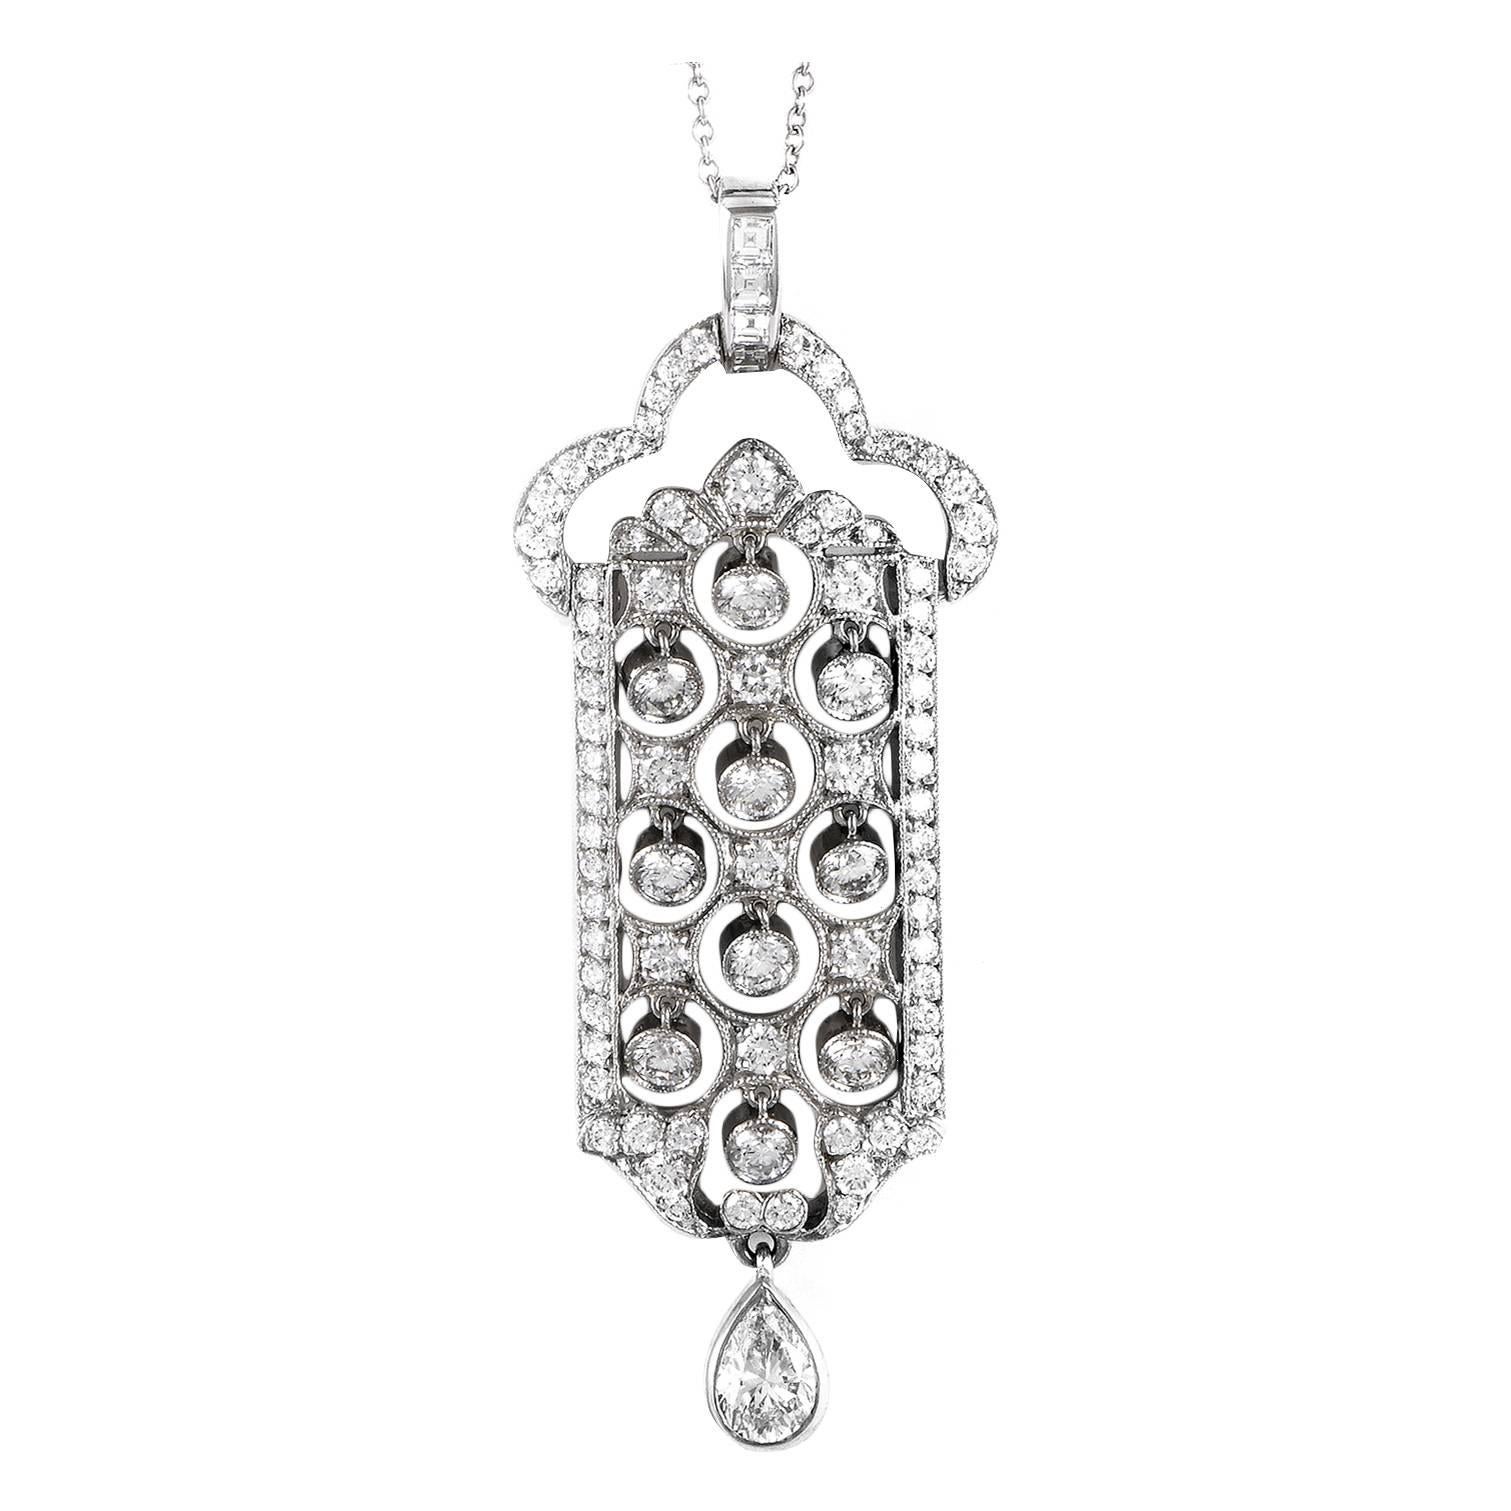 Tiffany & Co. Diamond Platinum Pendant Necklace 